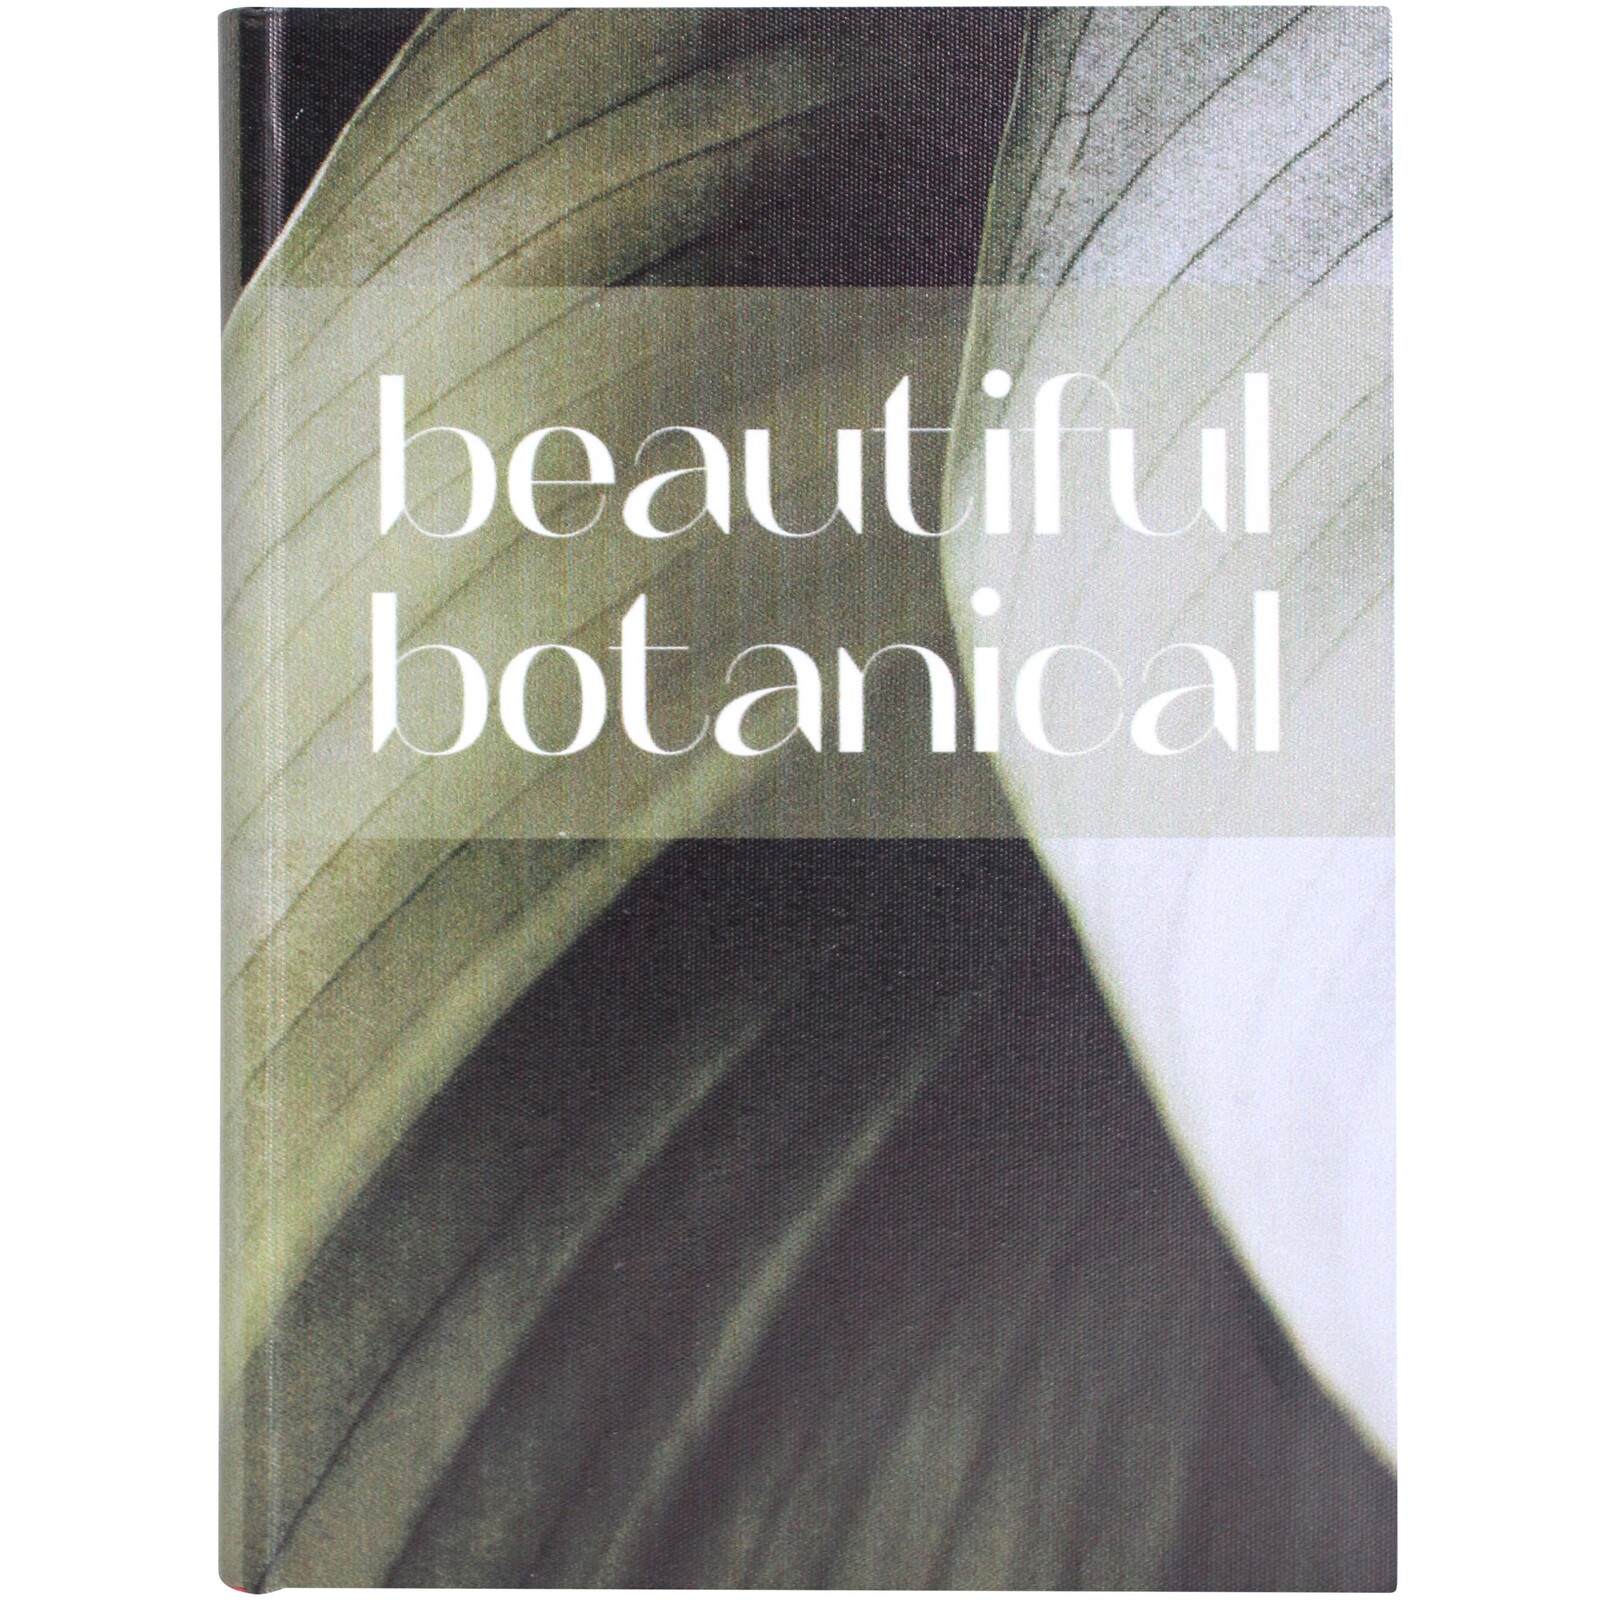 Book Box S/2 Beautiful Botanical